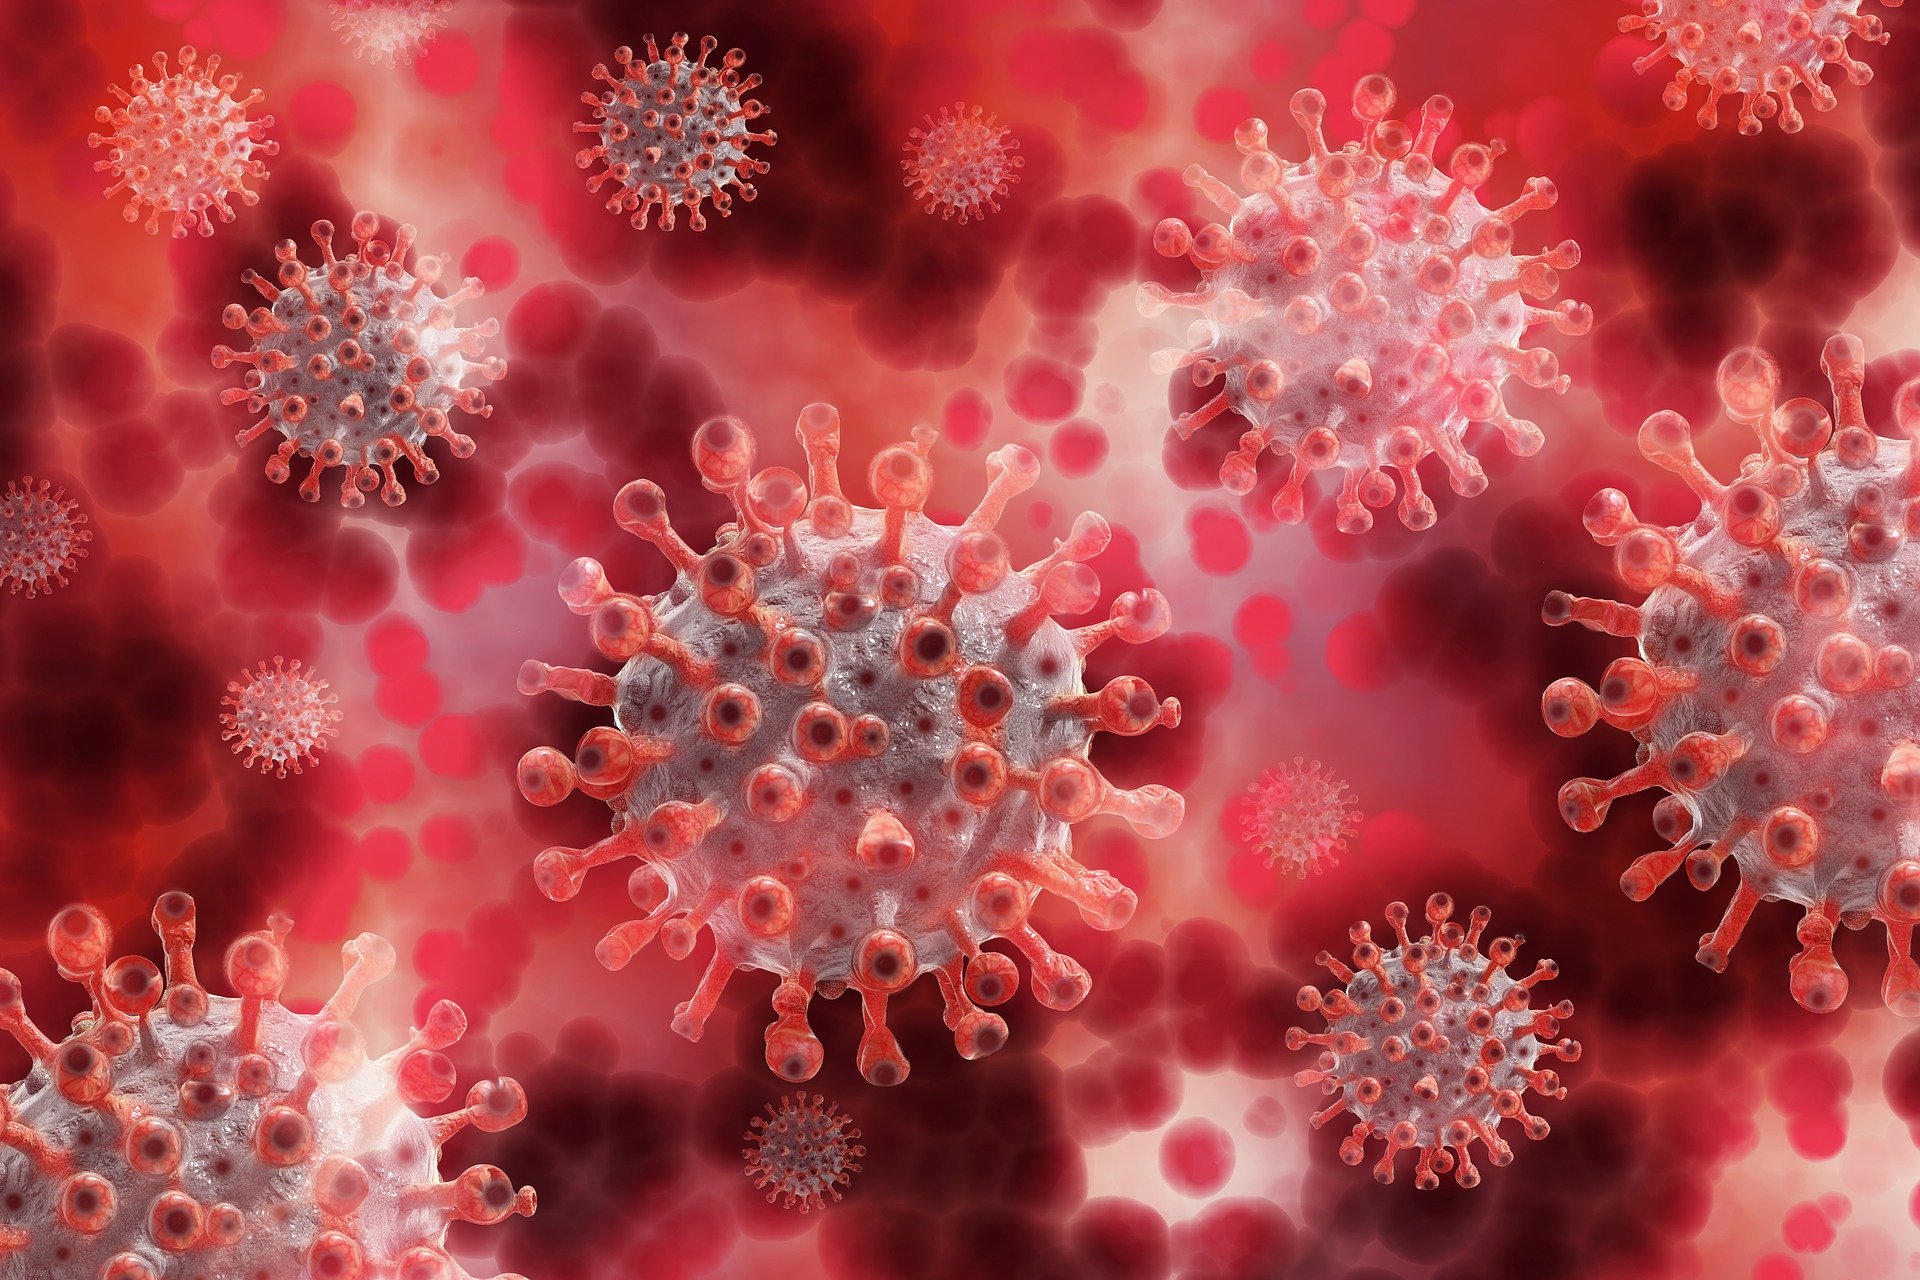 Coronavirus: in Toscana 422 nuovi casi, età media 47 anni. 14 decessi